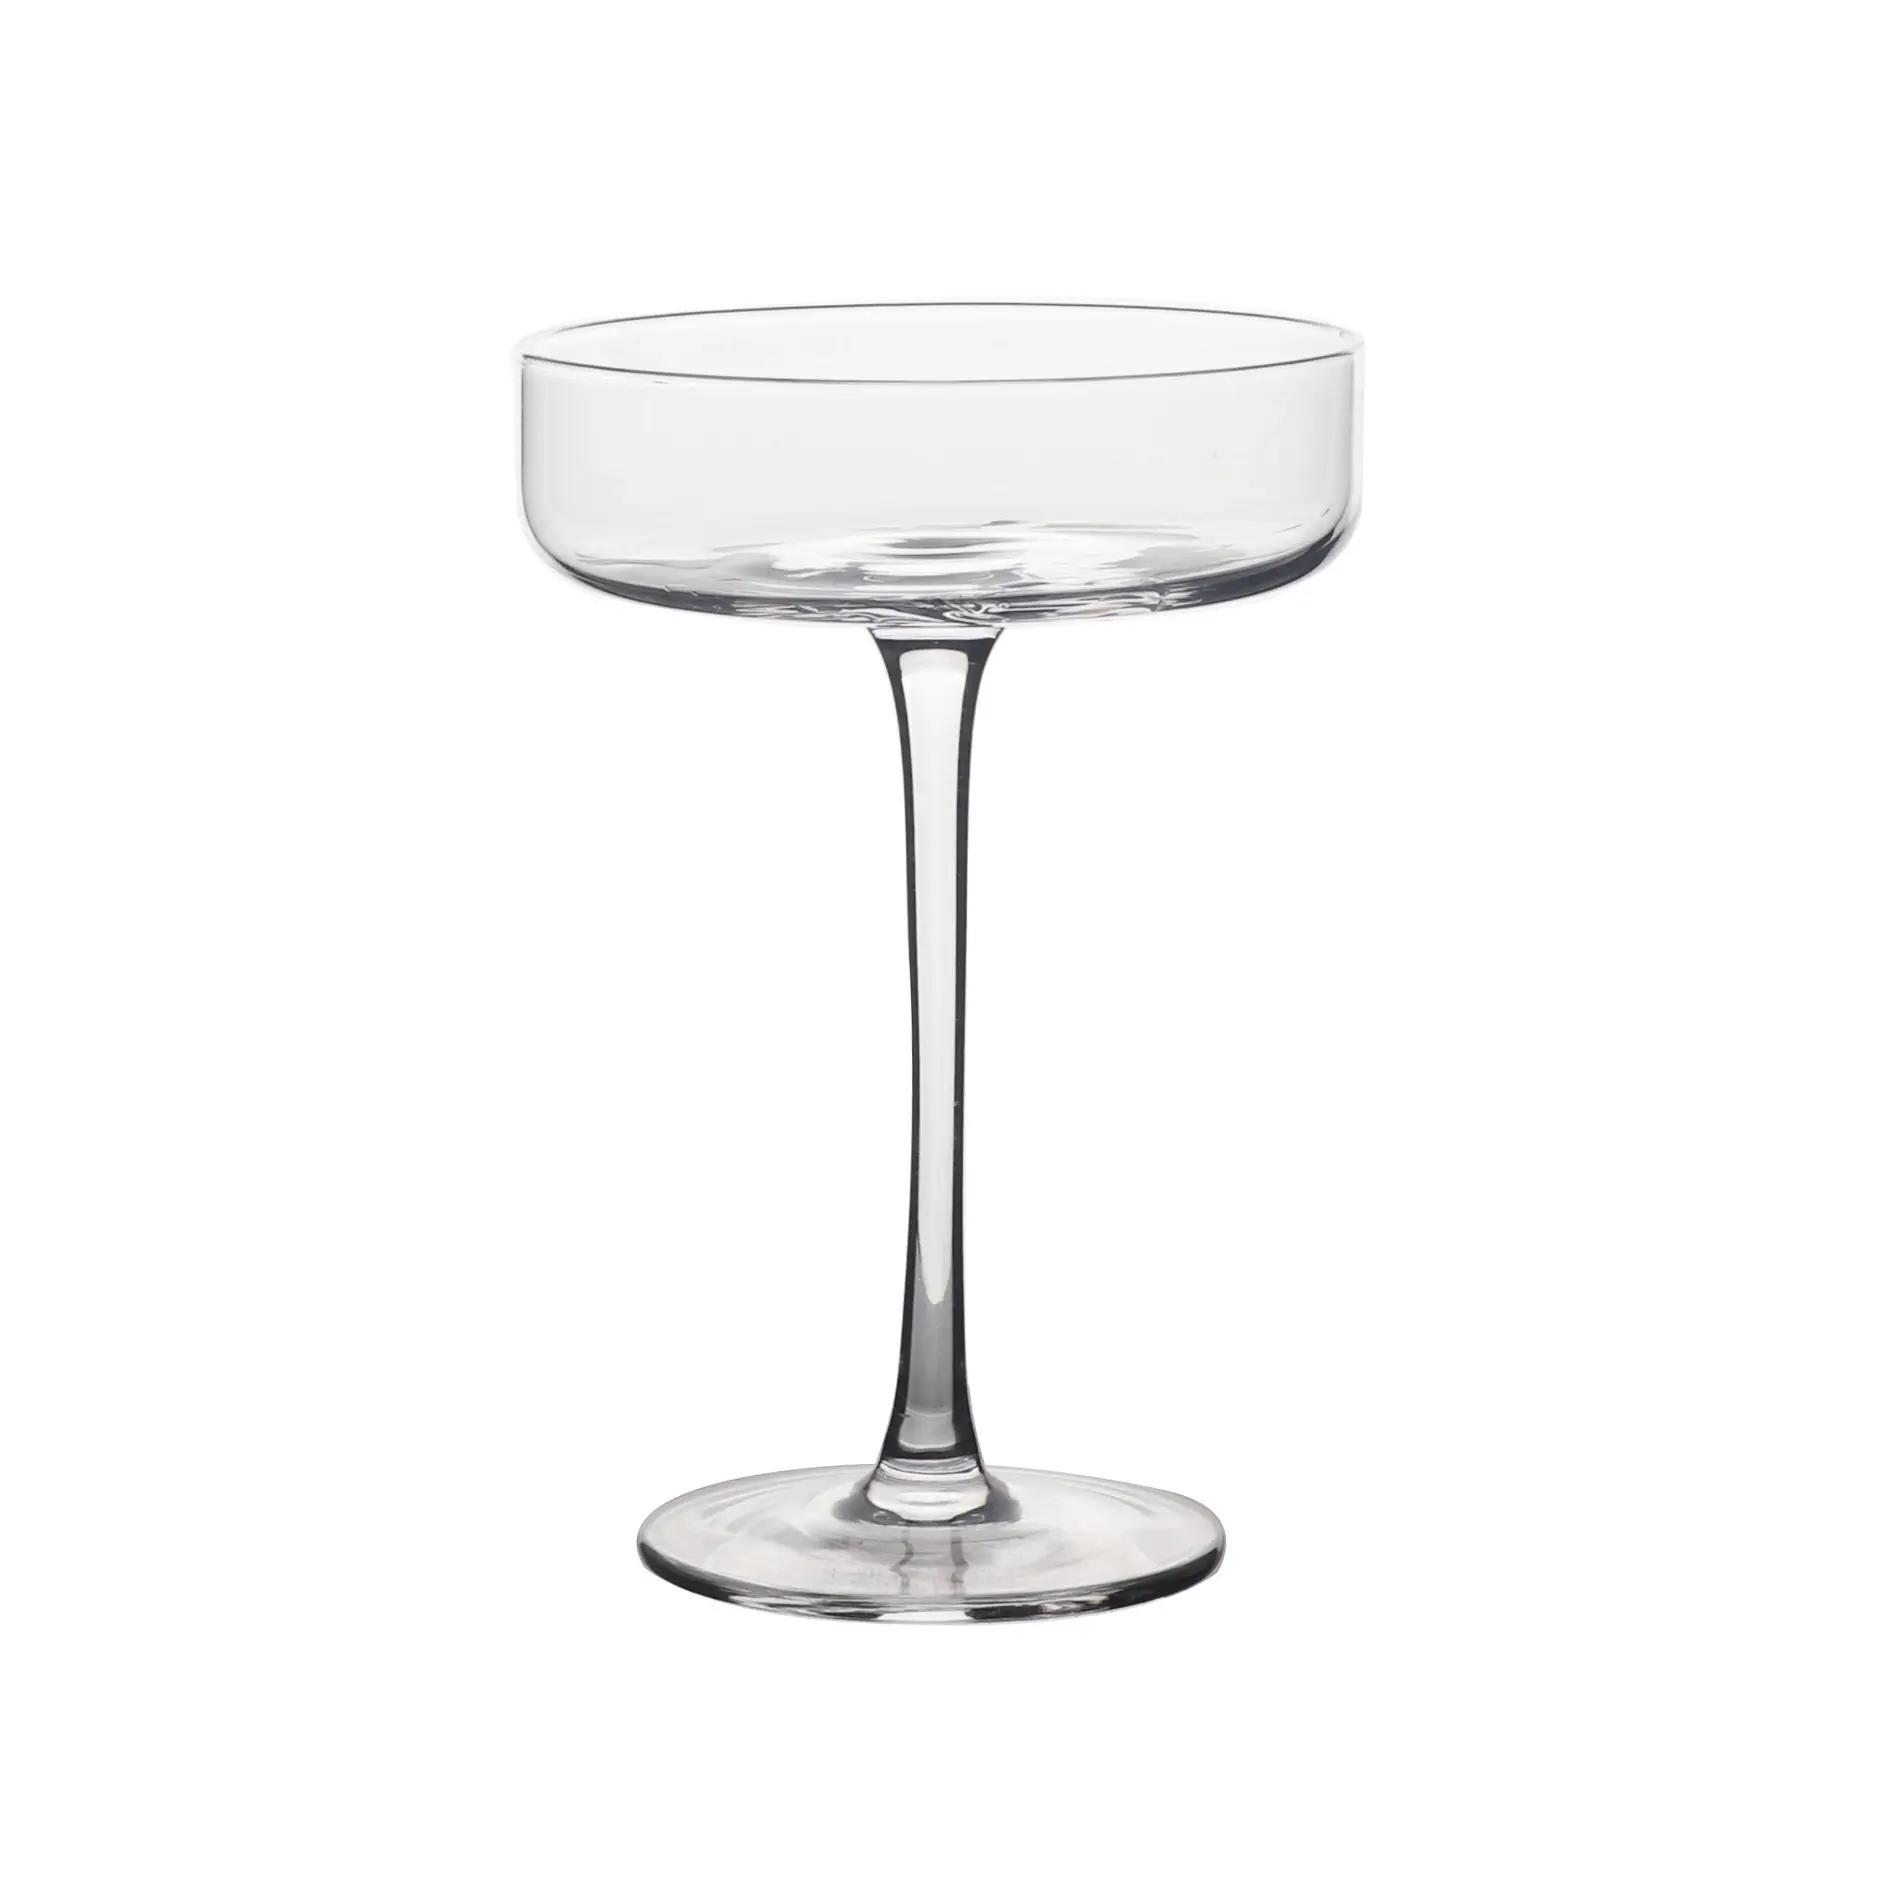 Creative crystal glass martini cocktail glass champagne glass bar home high-foot shallow dish ice cream bowl